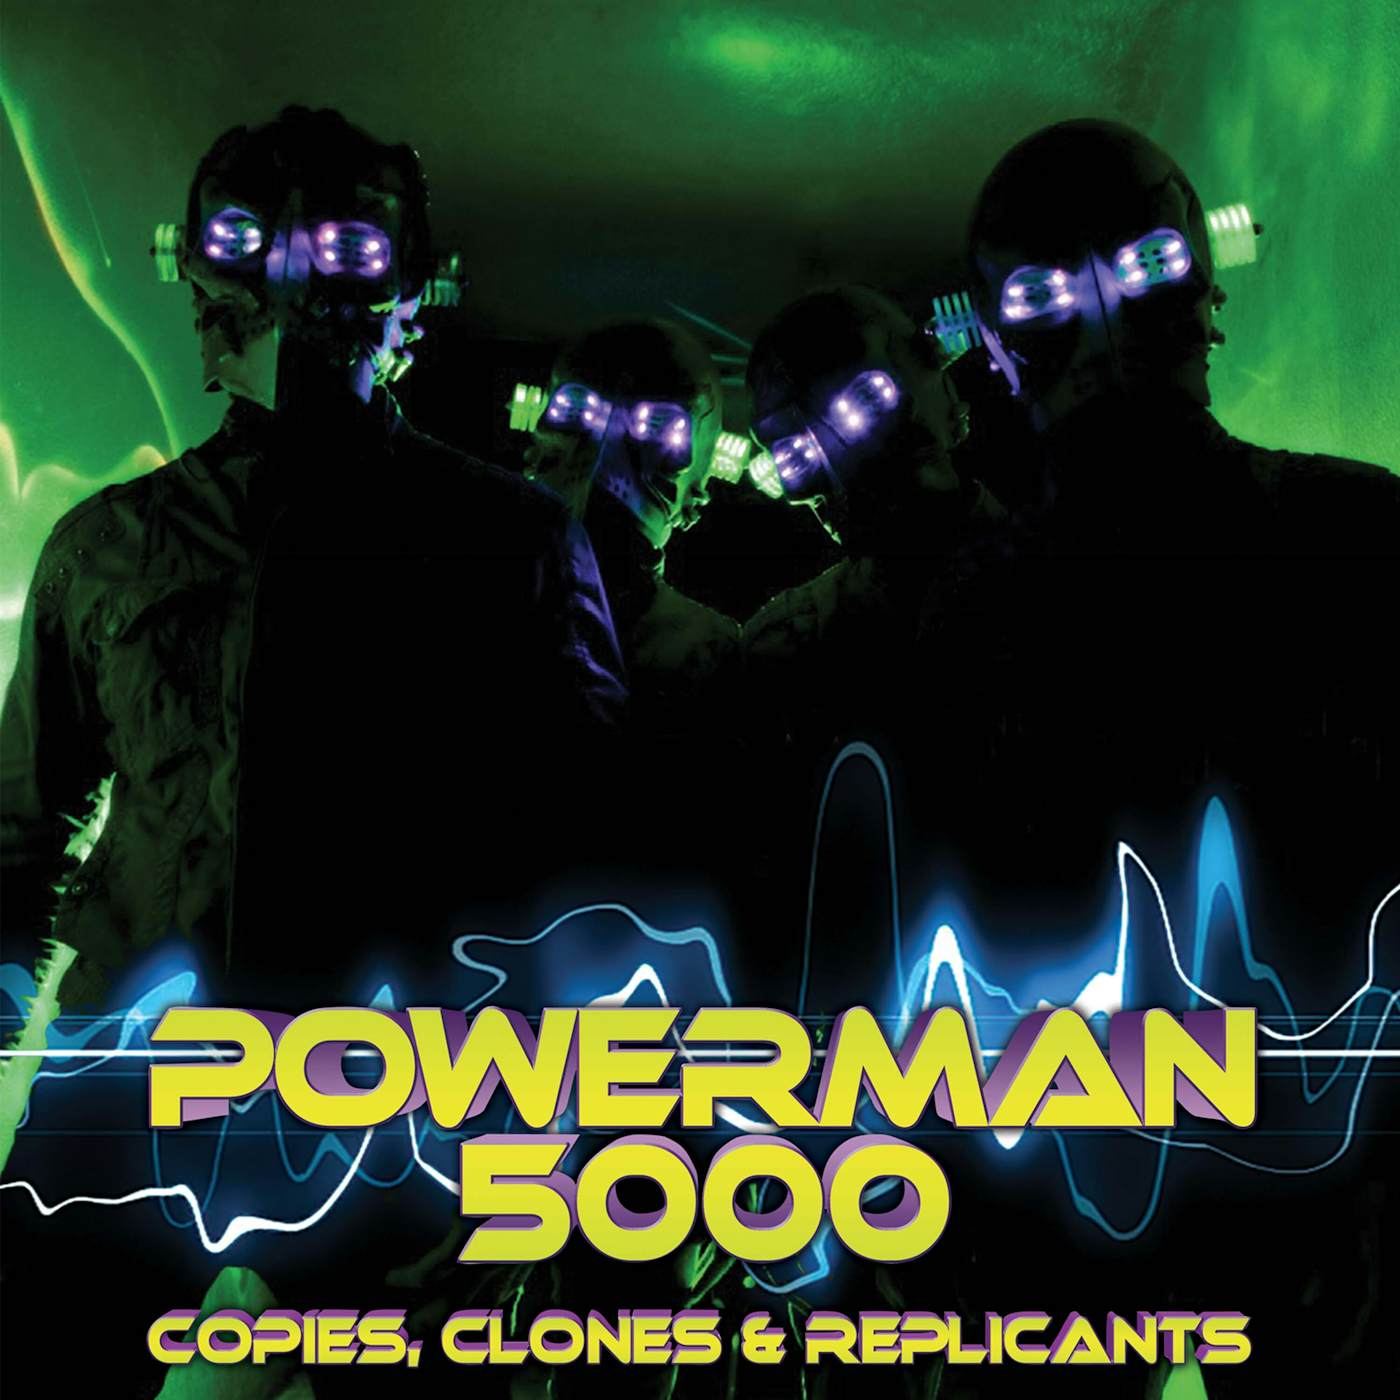 Powerman 5000 COPIES, CLONES & REPLICANTS (YELLOW VINYL) Vinyl Record